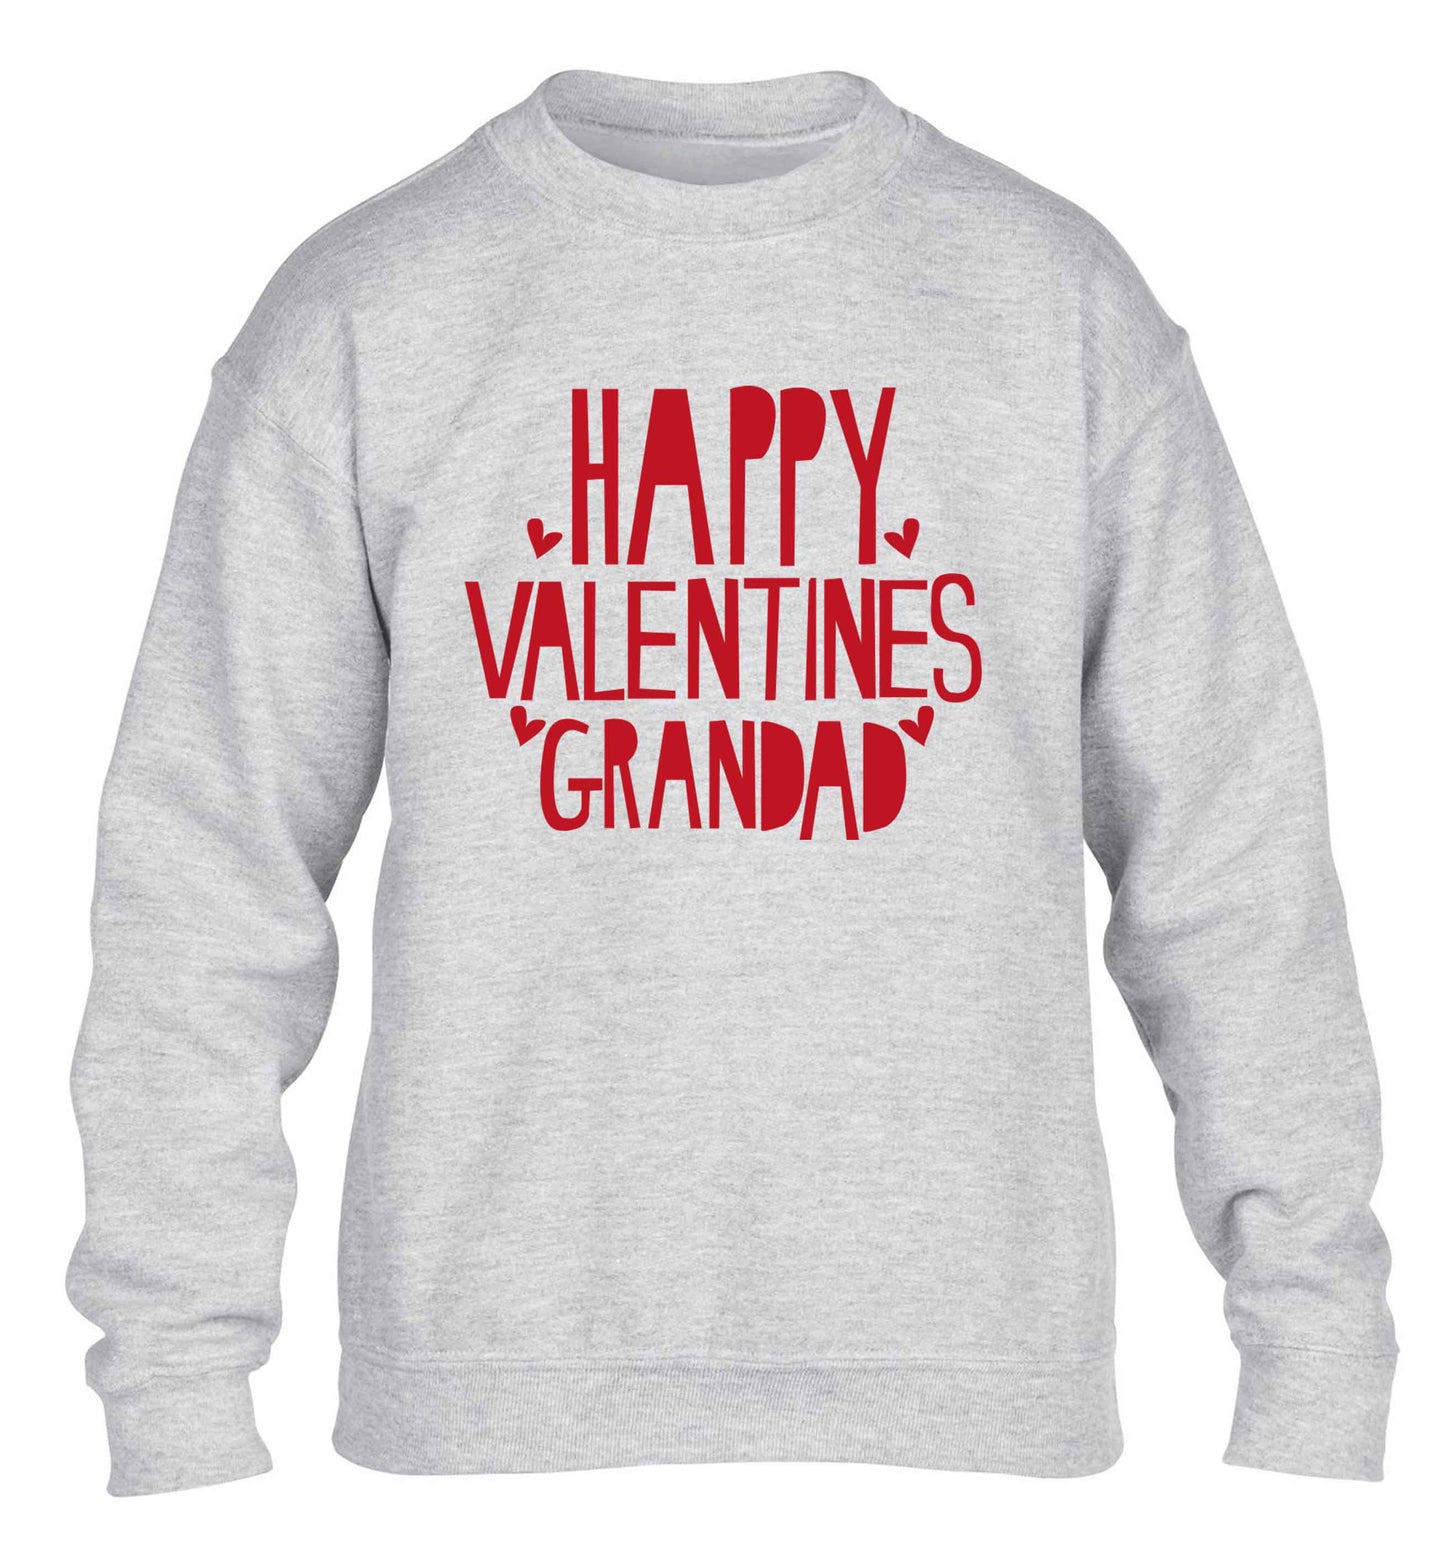 Happy valentines grandad children's grey sweater 12-13 Years